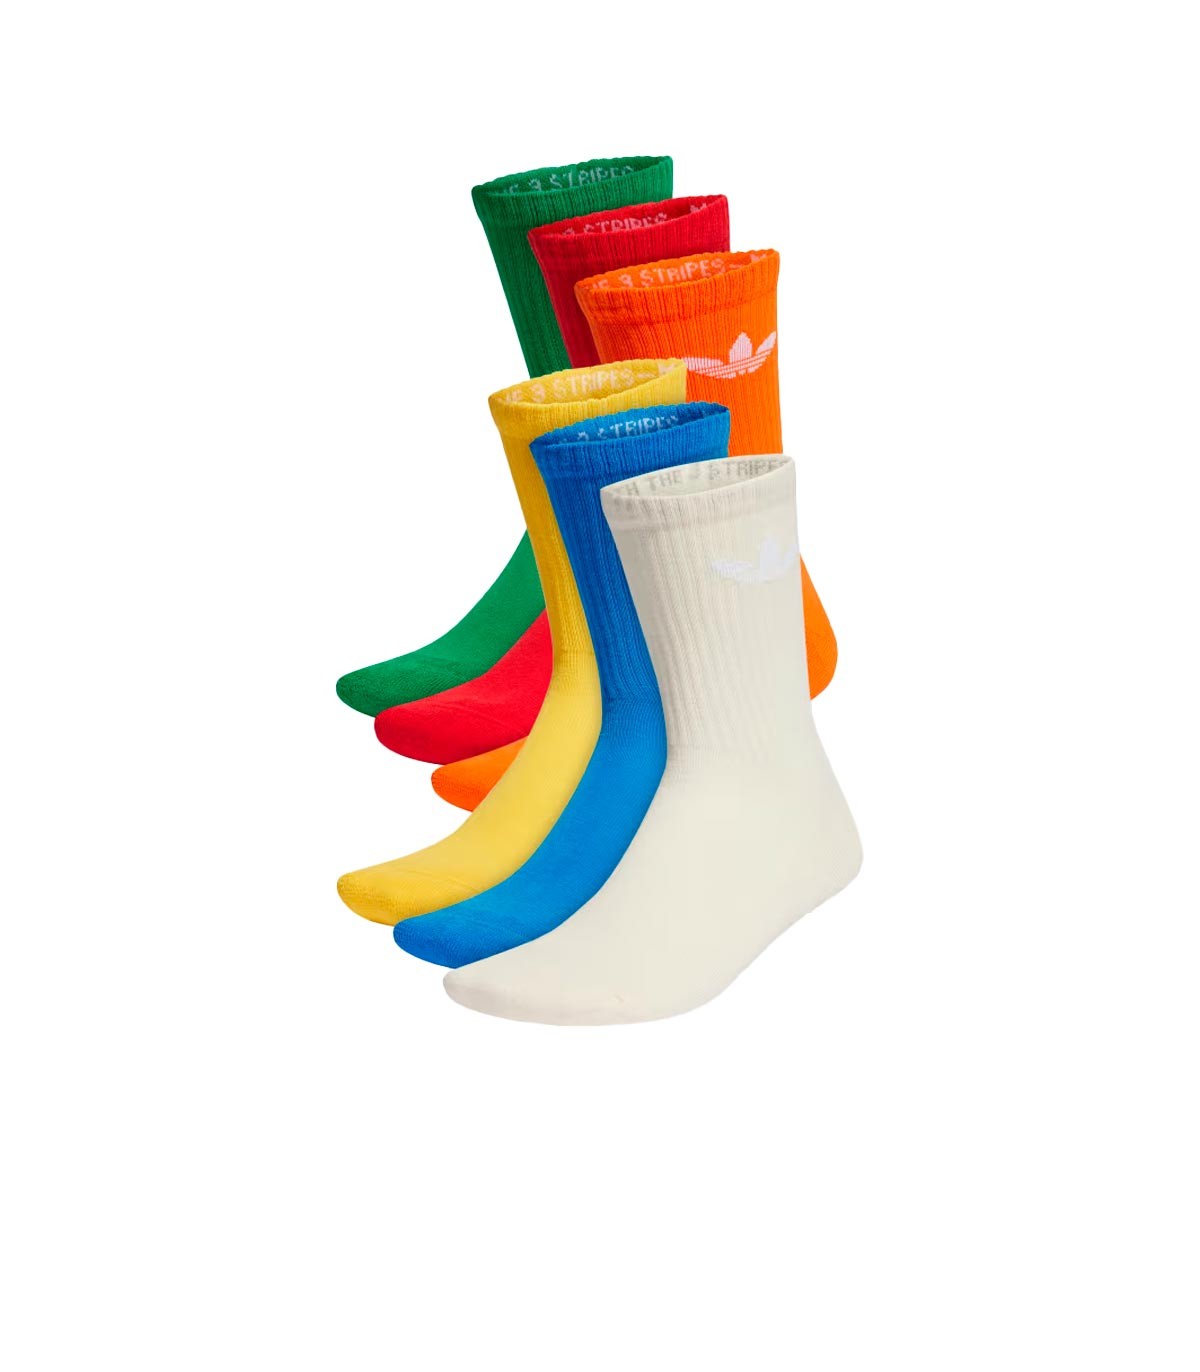 Adidas - Calcetines Cásicos Trefoil 6 Pack - Multicolor